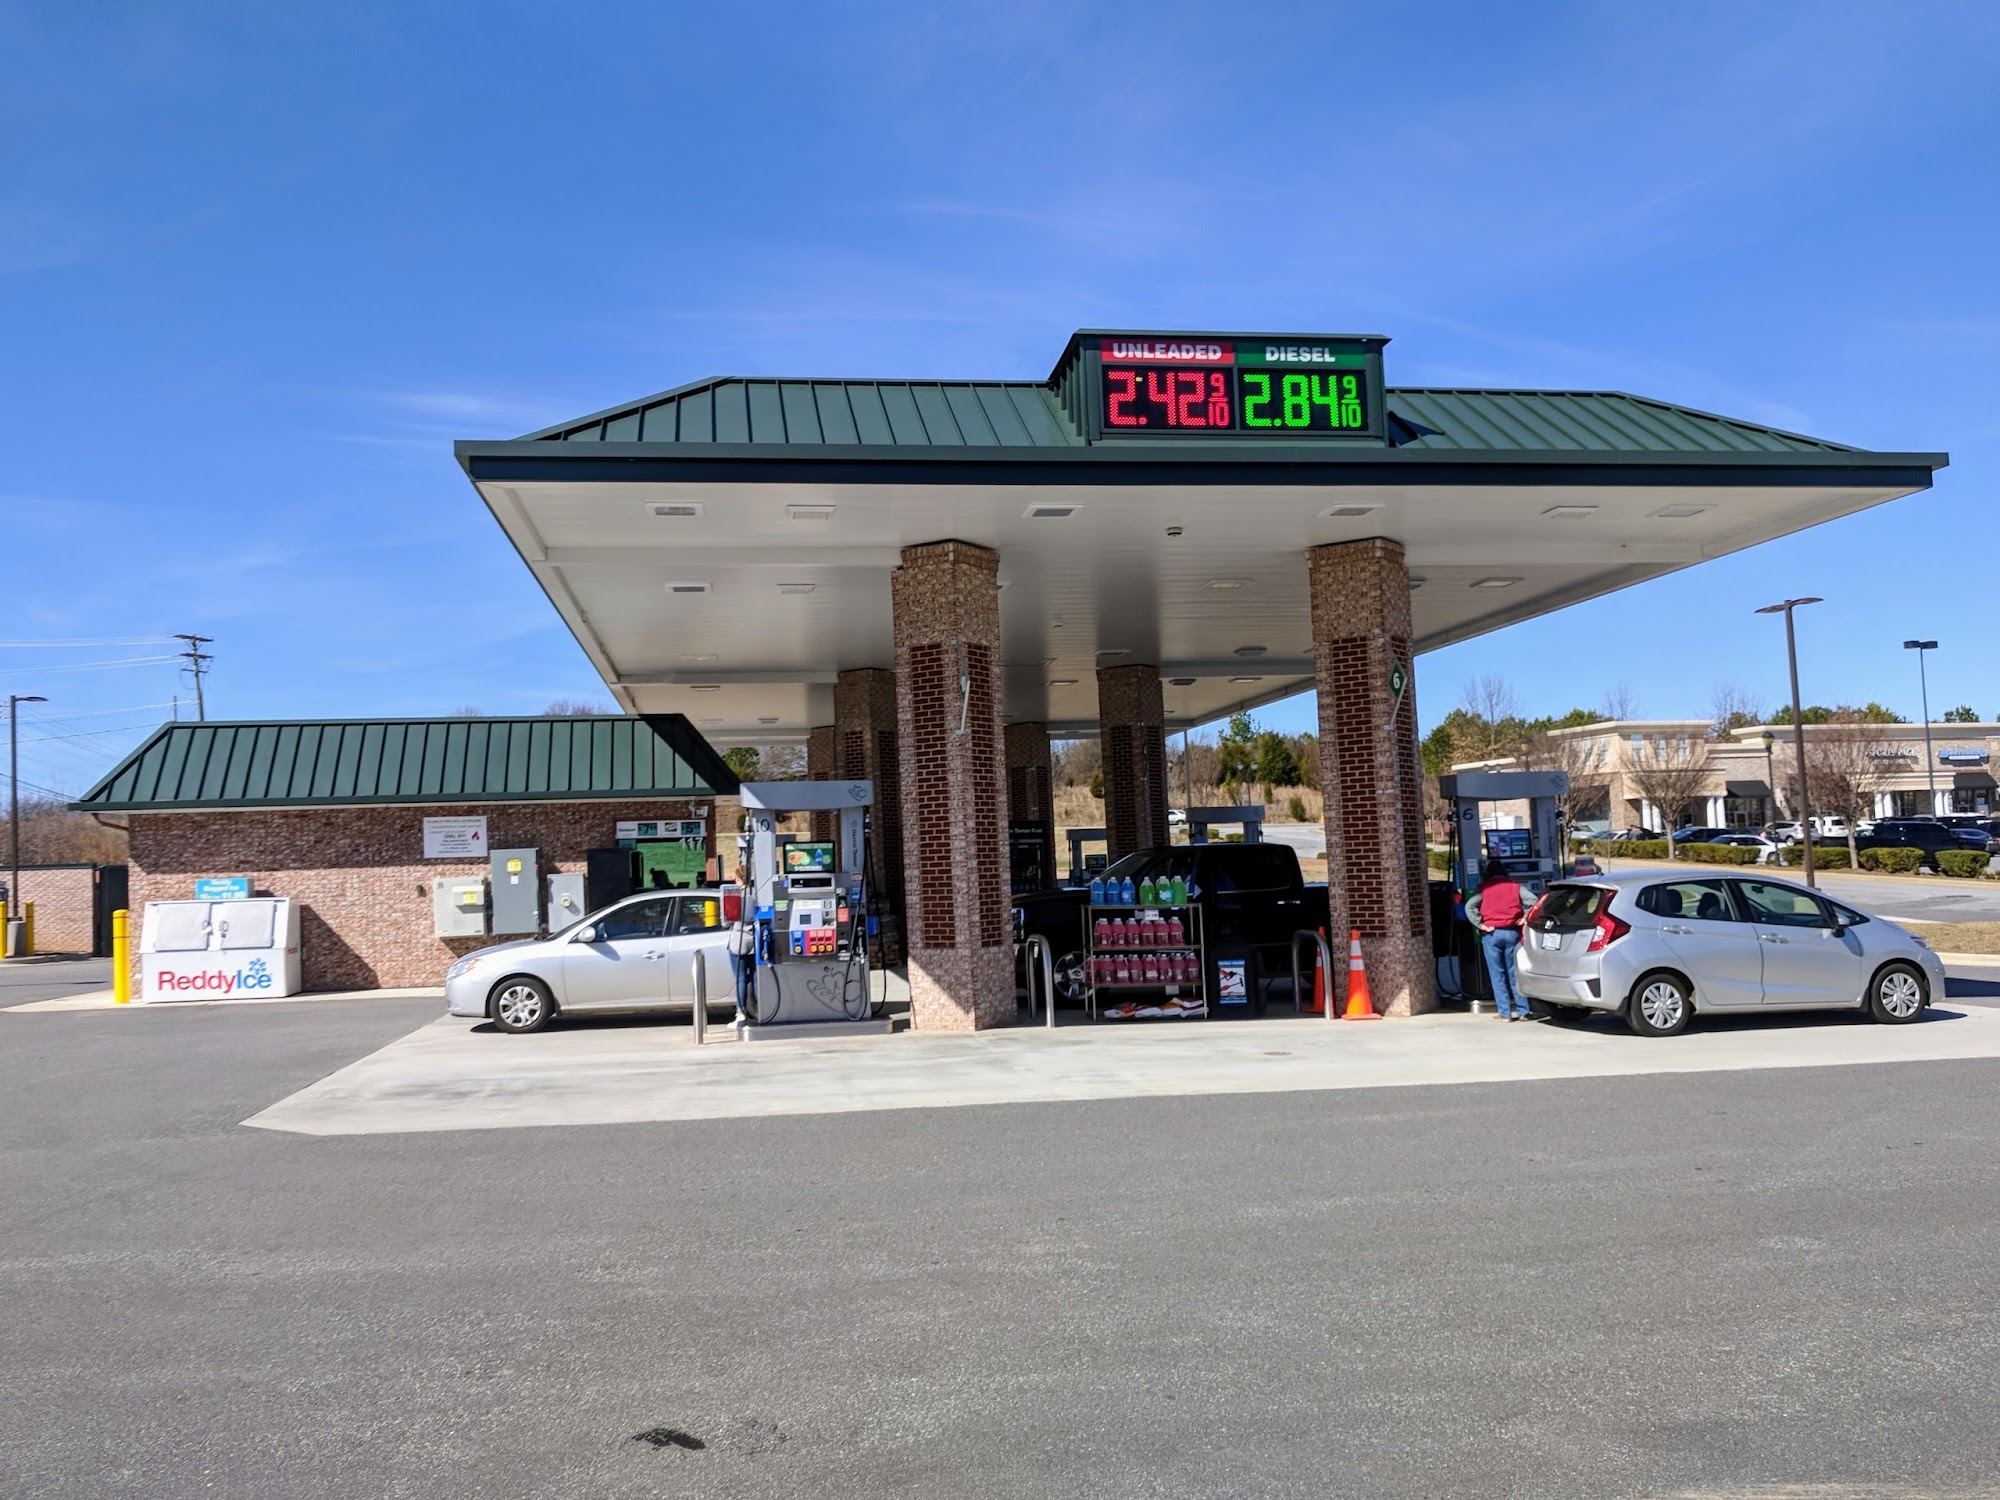 Harris Teeter Fuel Center